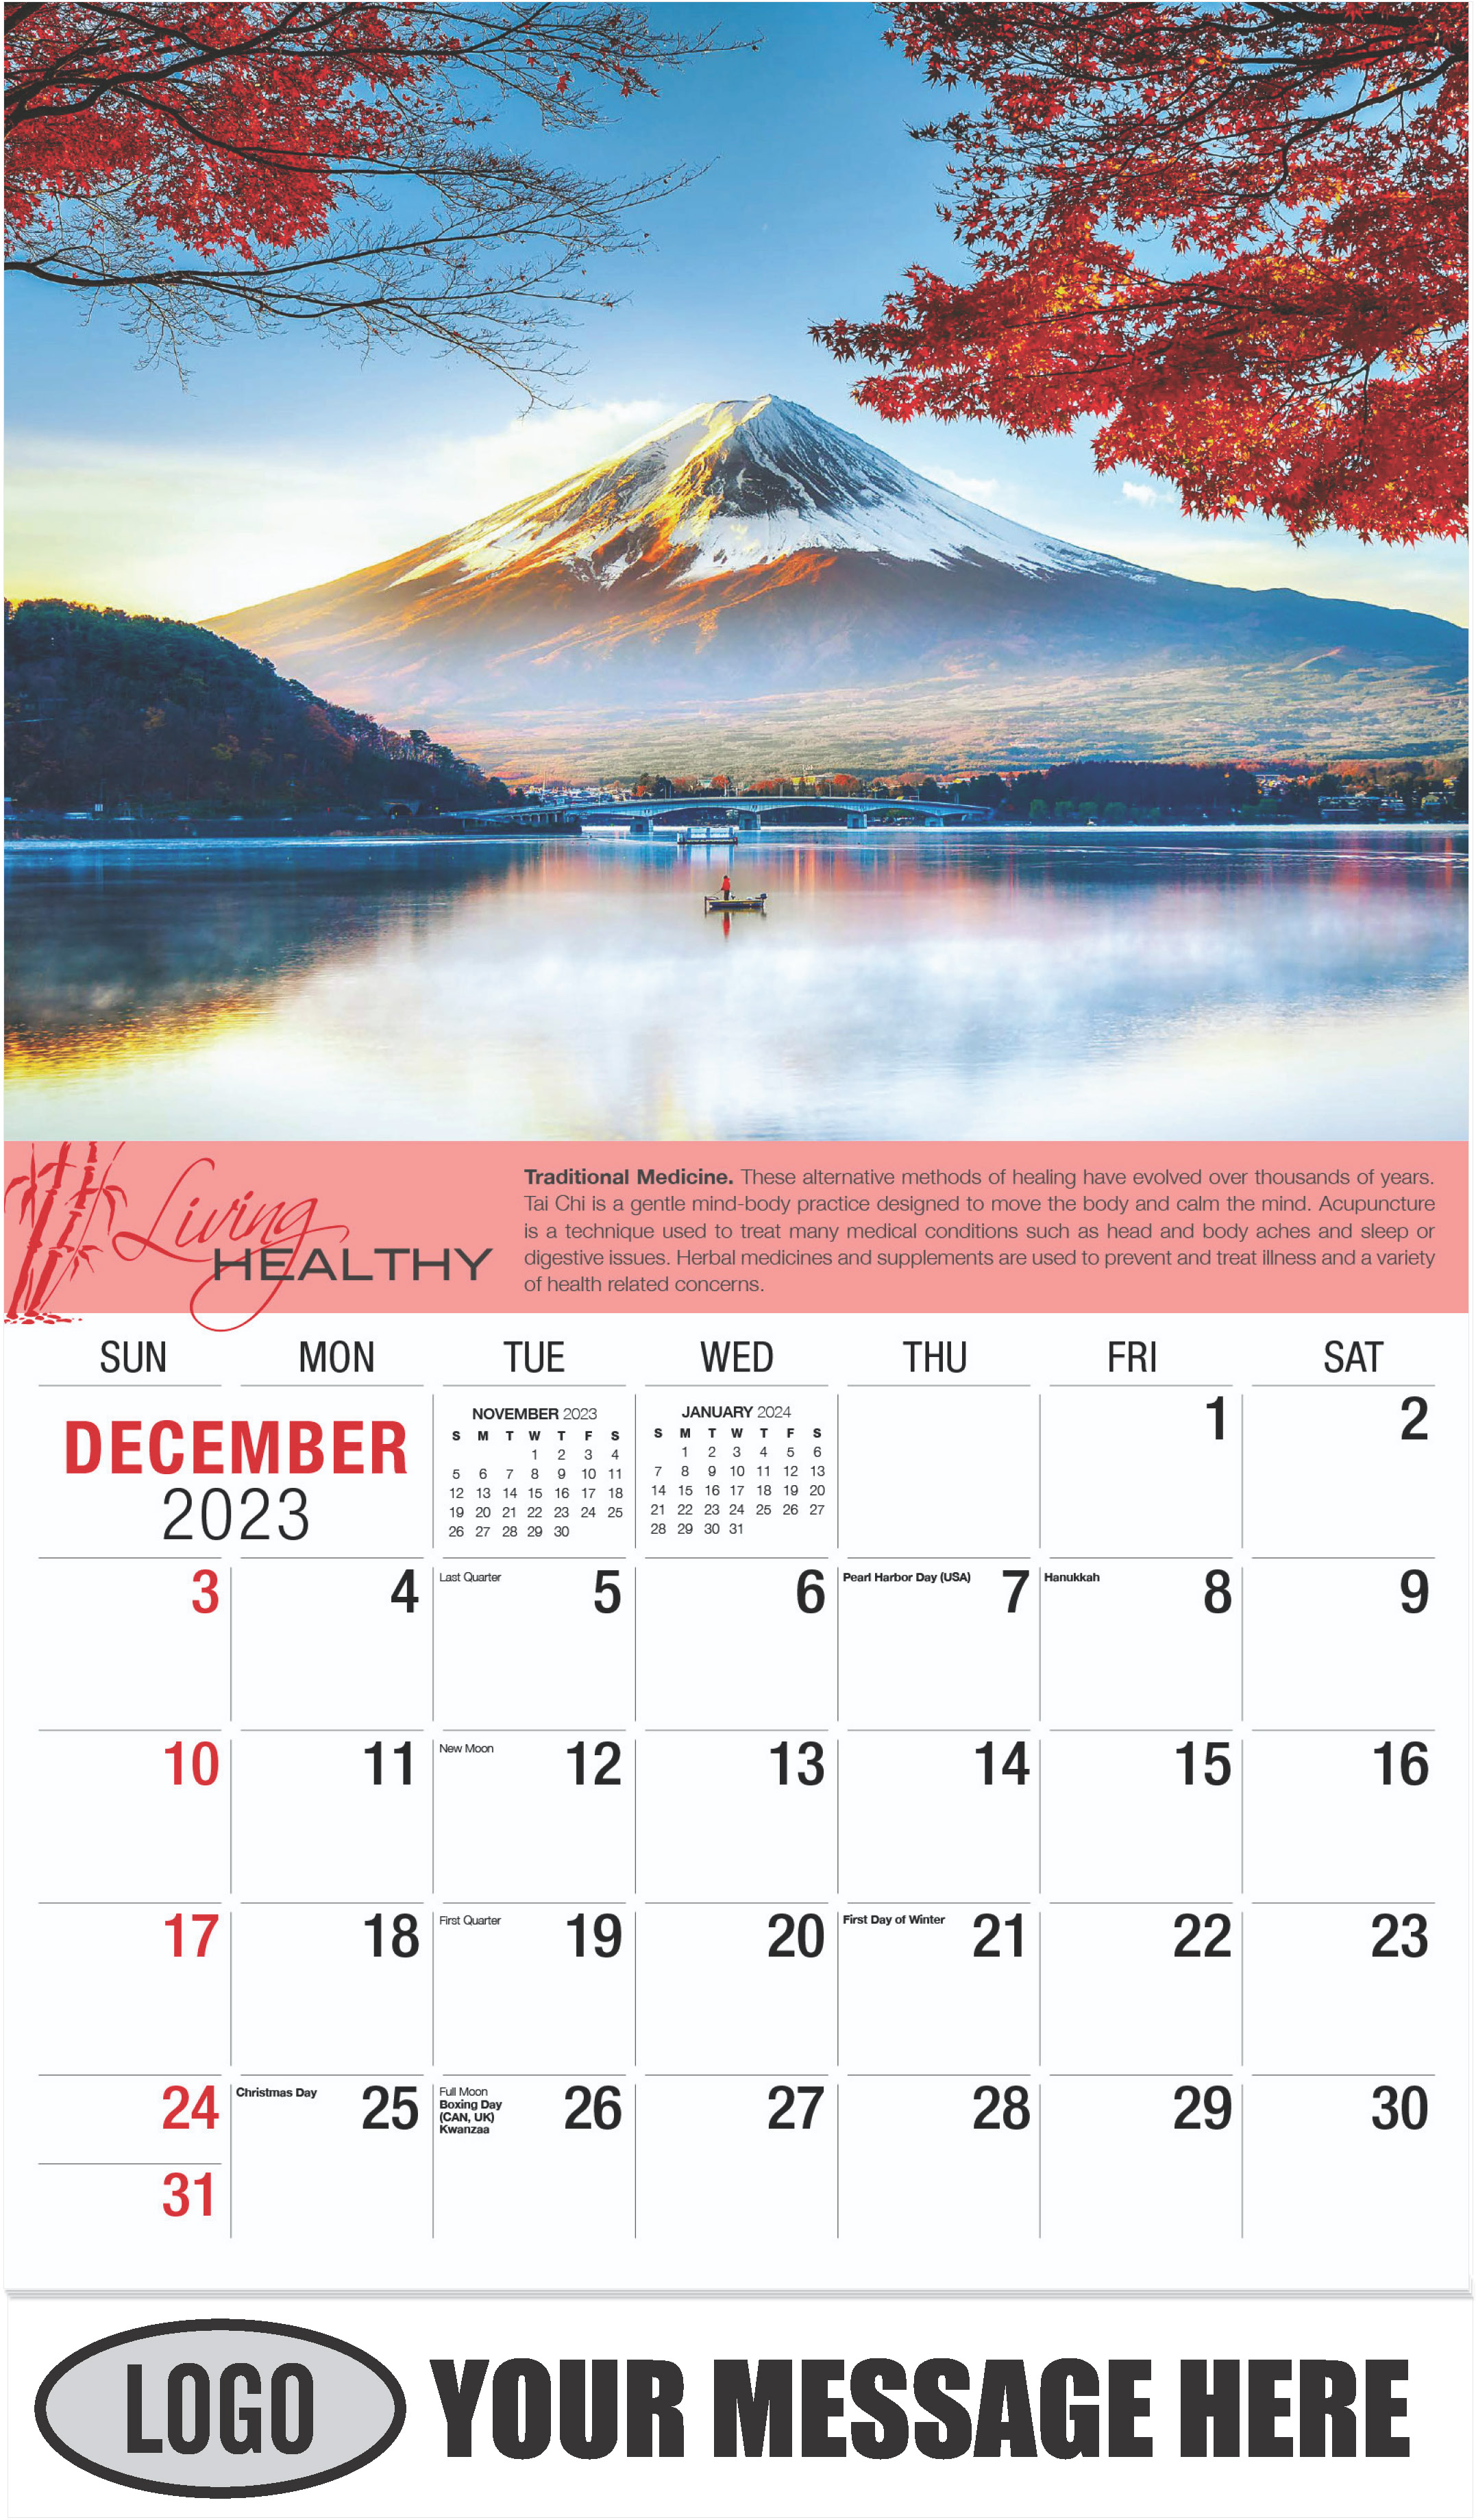 Fuji Mountain - December 2023 - Living Healthy 2023 Promotional Calendar